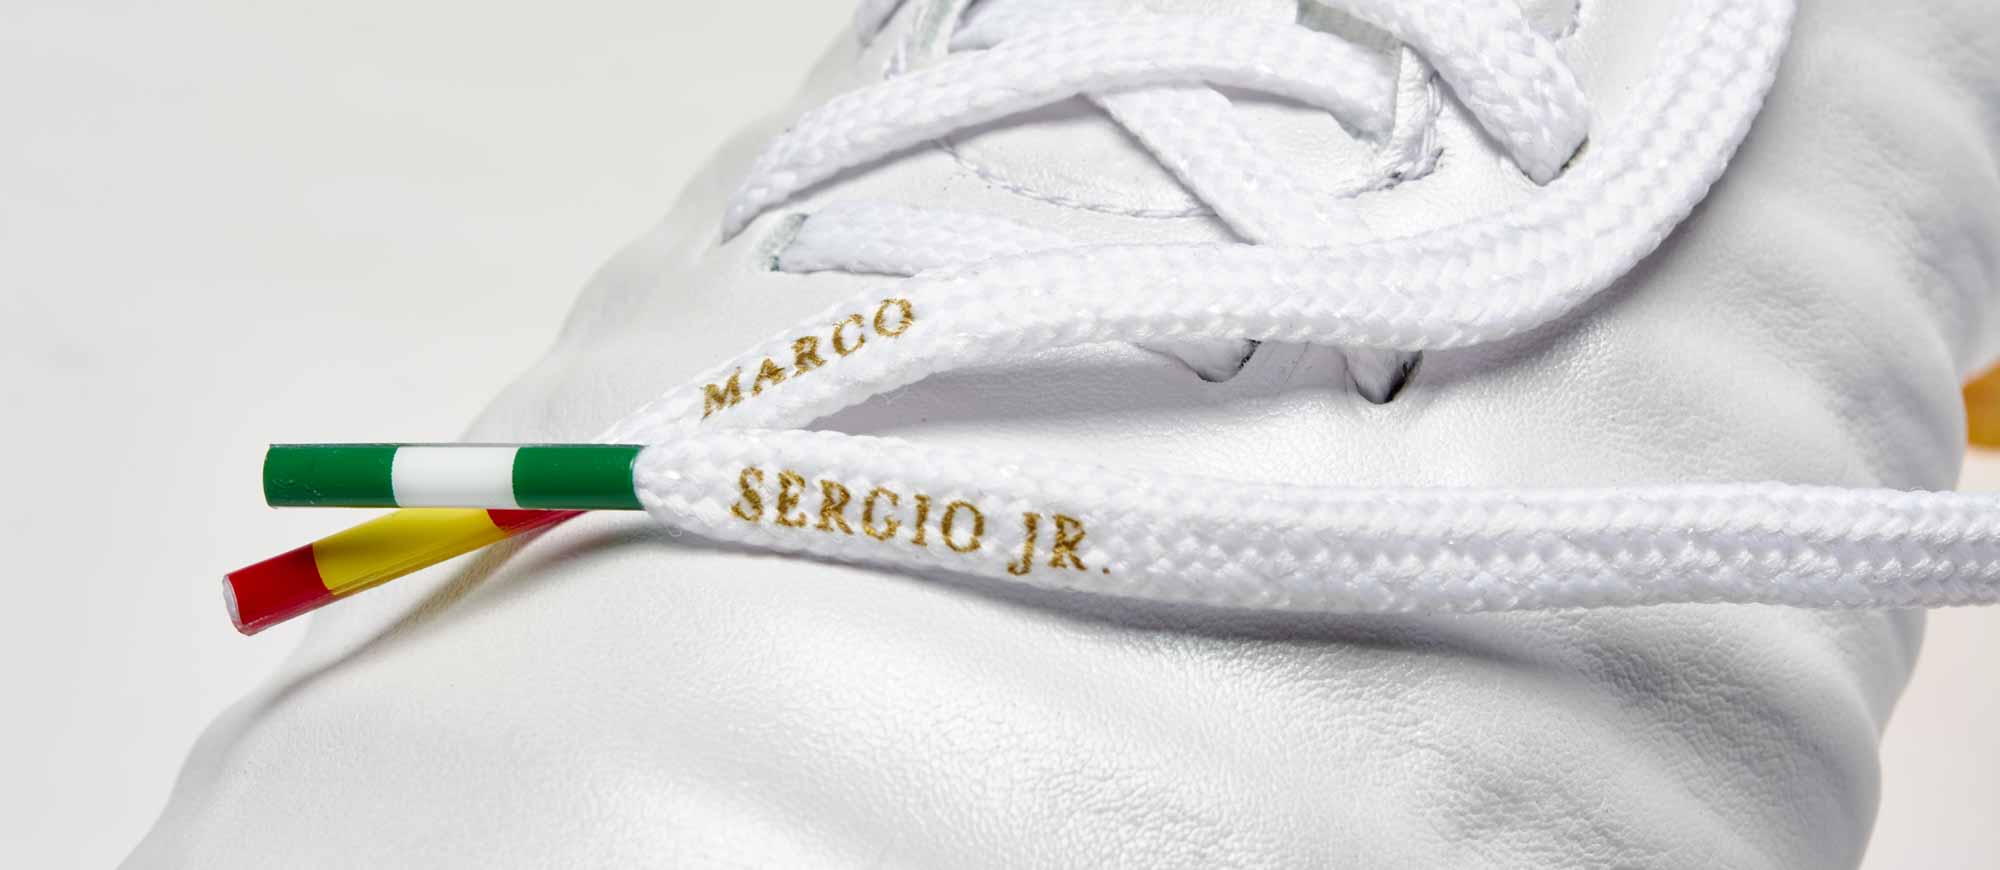 Nike Tiempo Legend VII Ramos Soccer Cleats